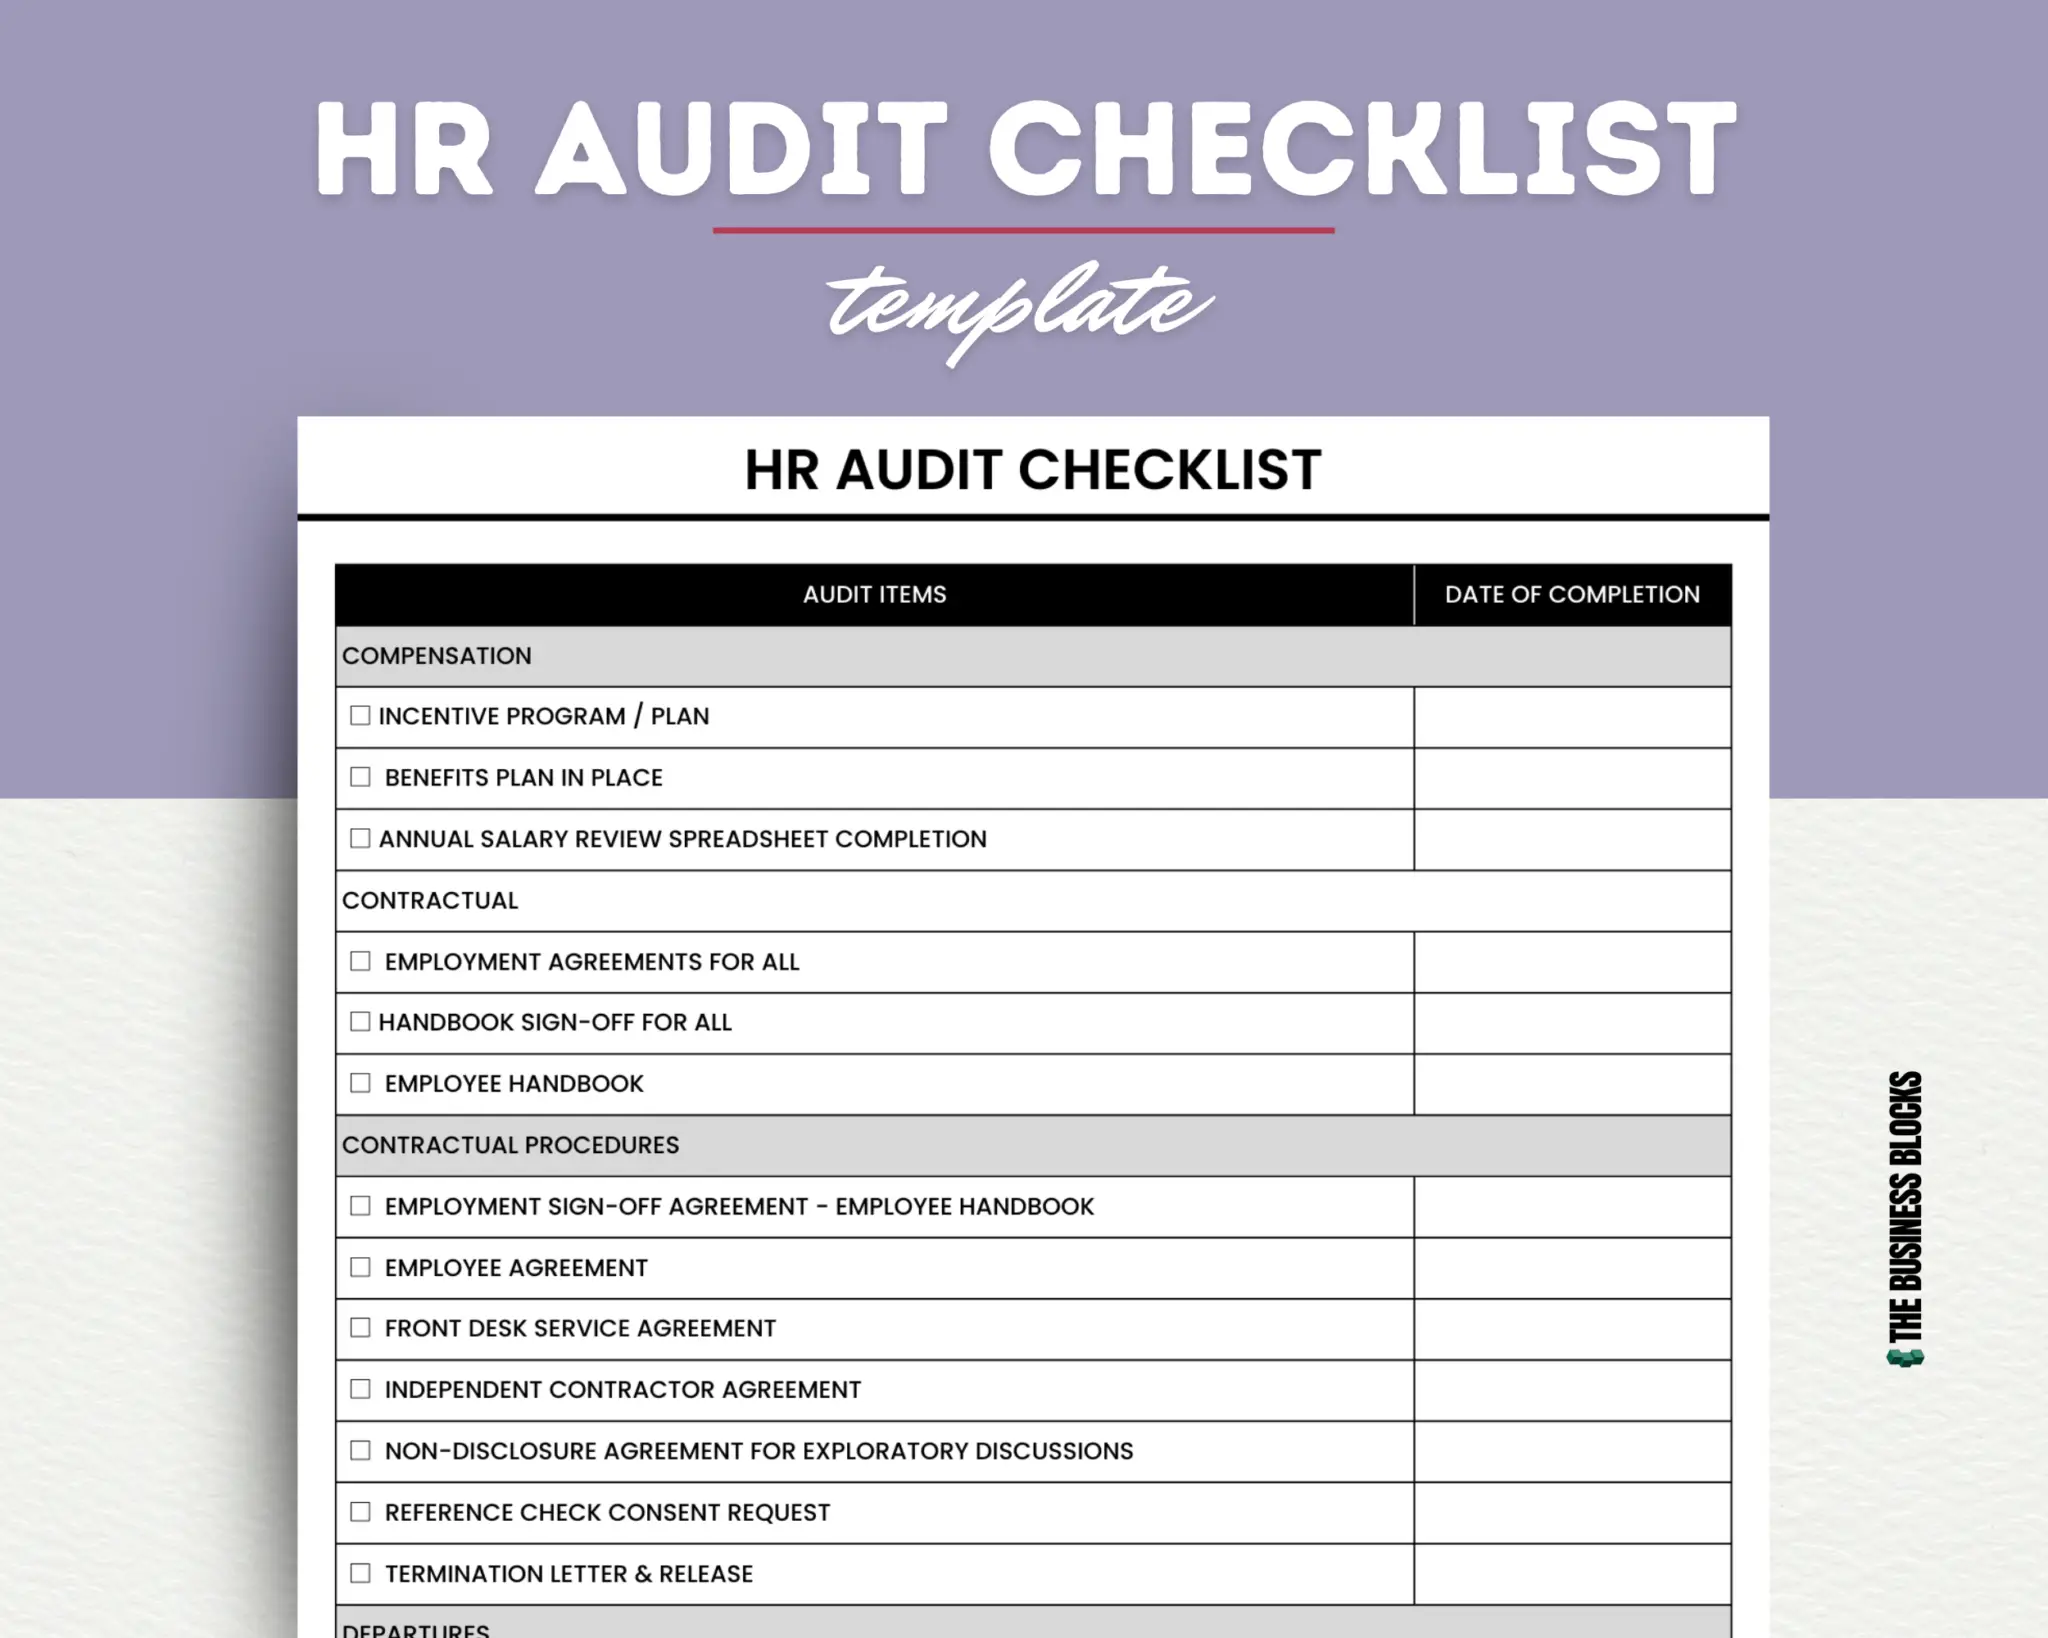 hr-audit-checklist-template-the-business-blocks